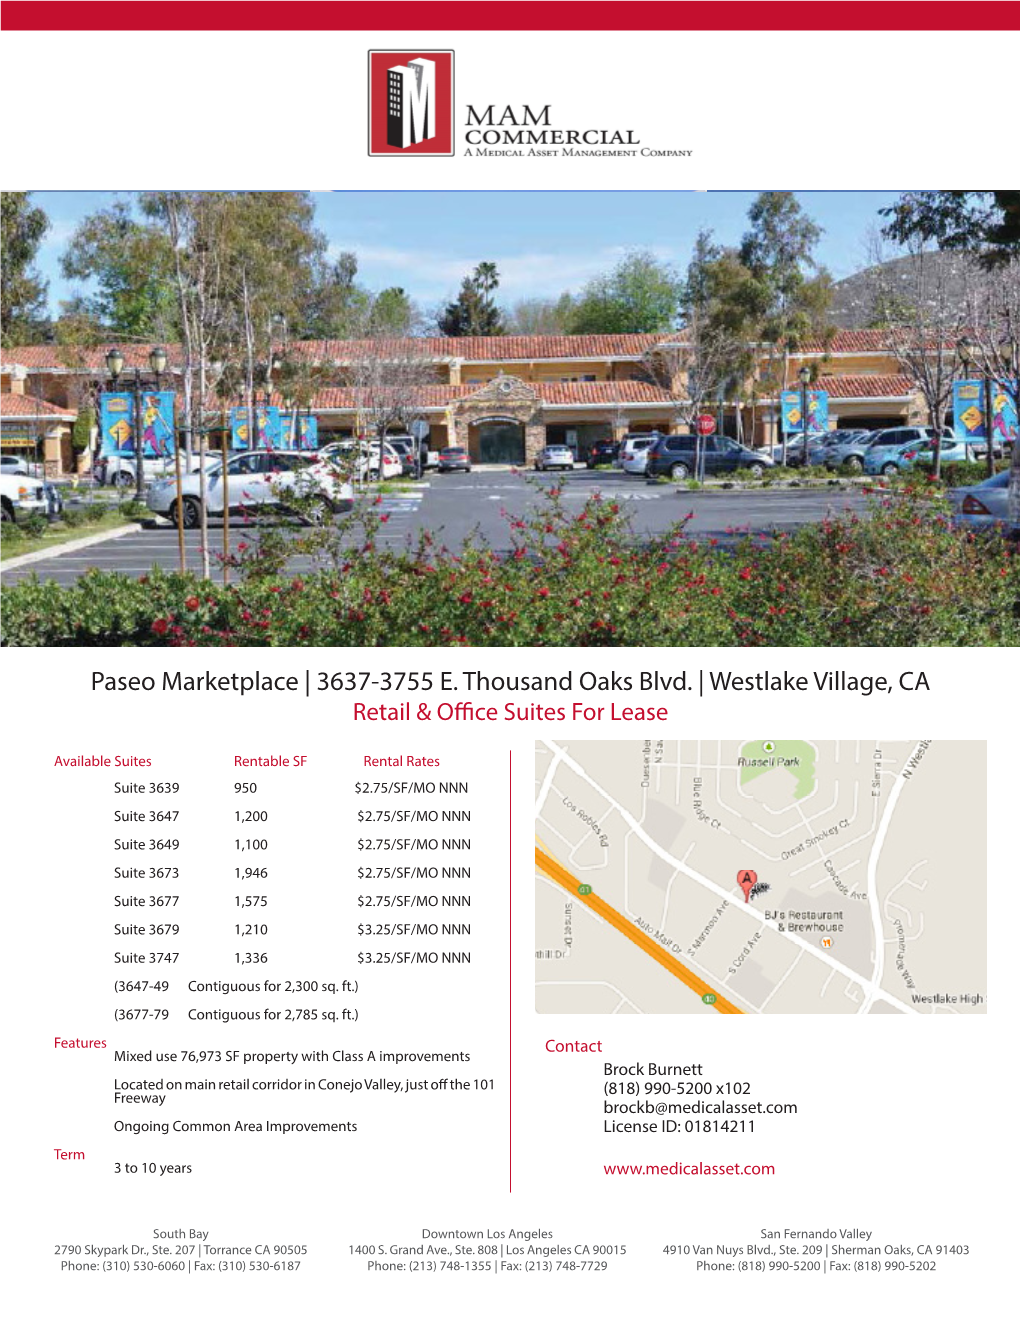 Paseo Marketplace | 3637-3755 E. Thousand Oaks Blvd. | Westlake Village, CA Retail & Office Suites for Lease